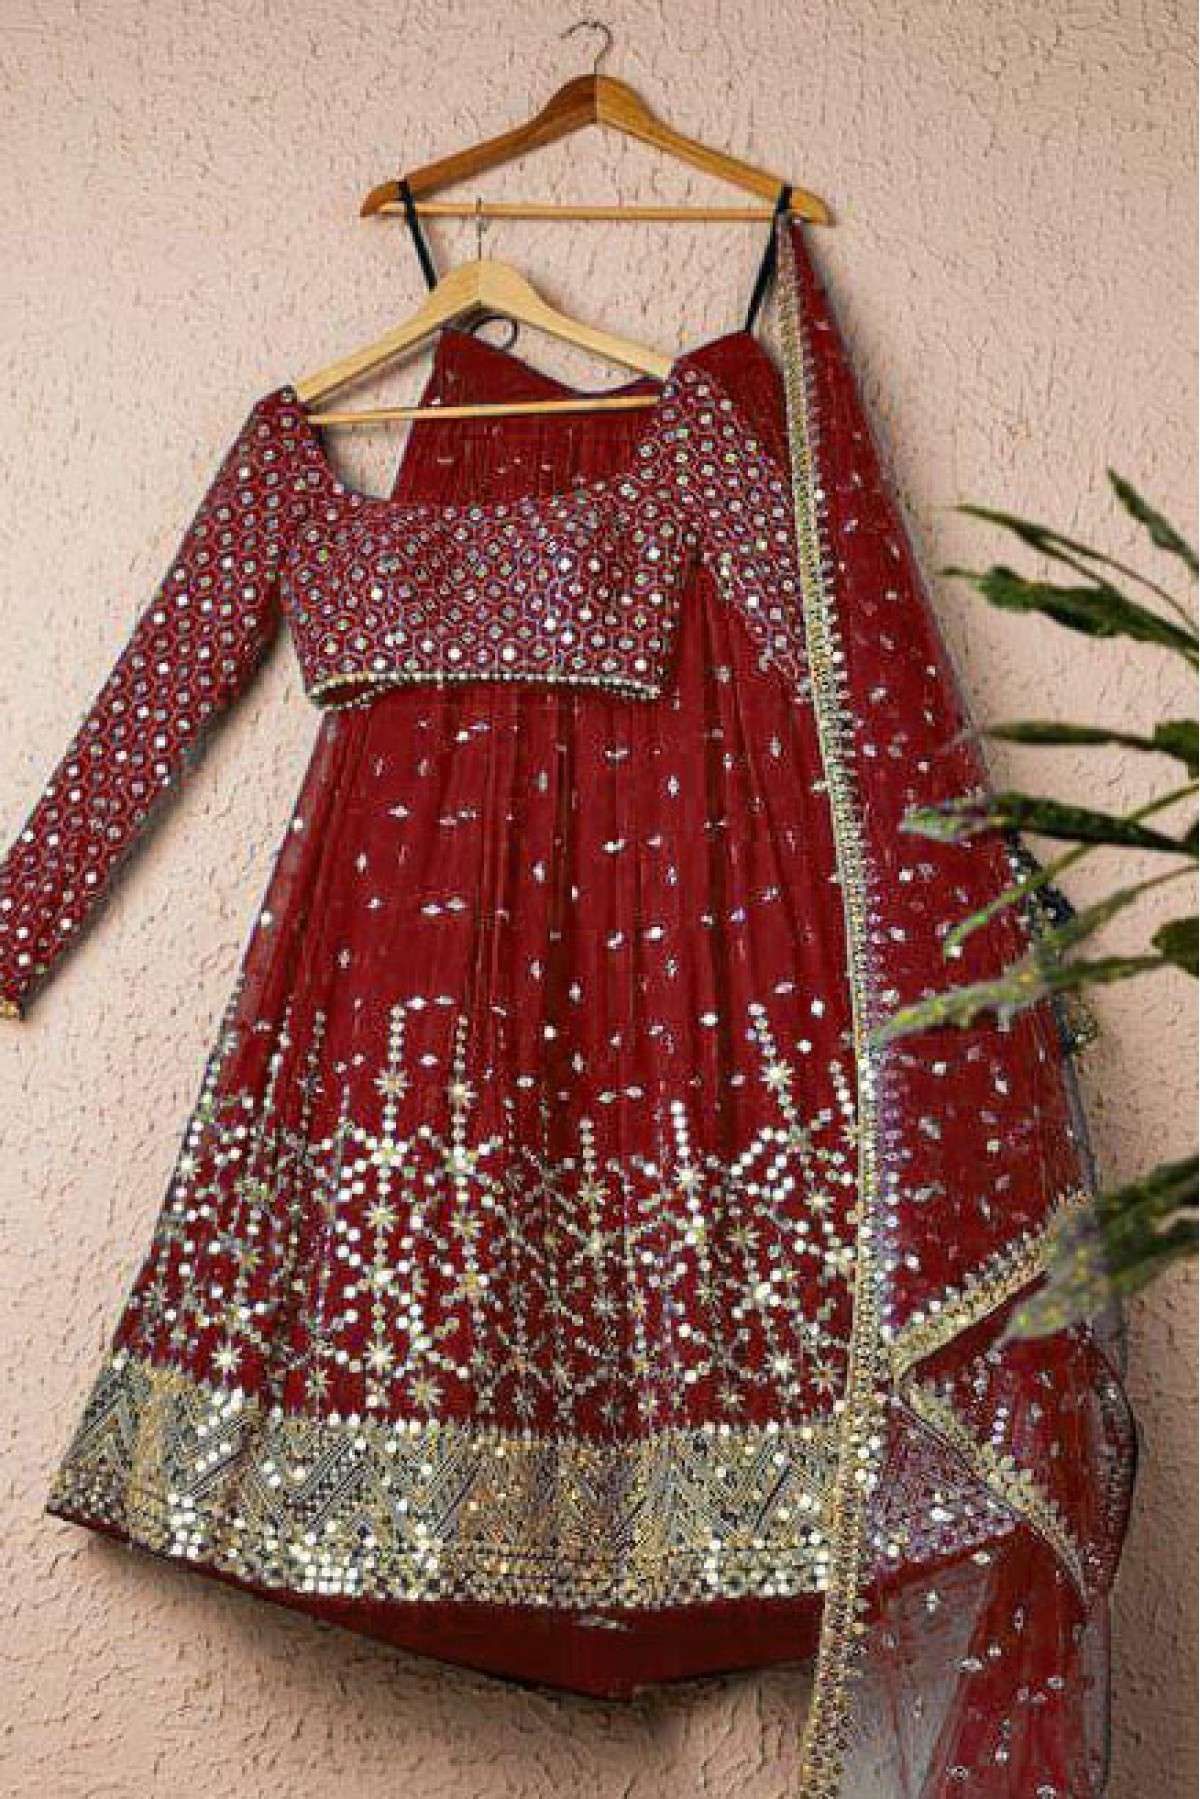 Georgette Embroidery Lehenga Choli In Maroon Colour - LD4010258